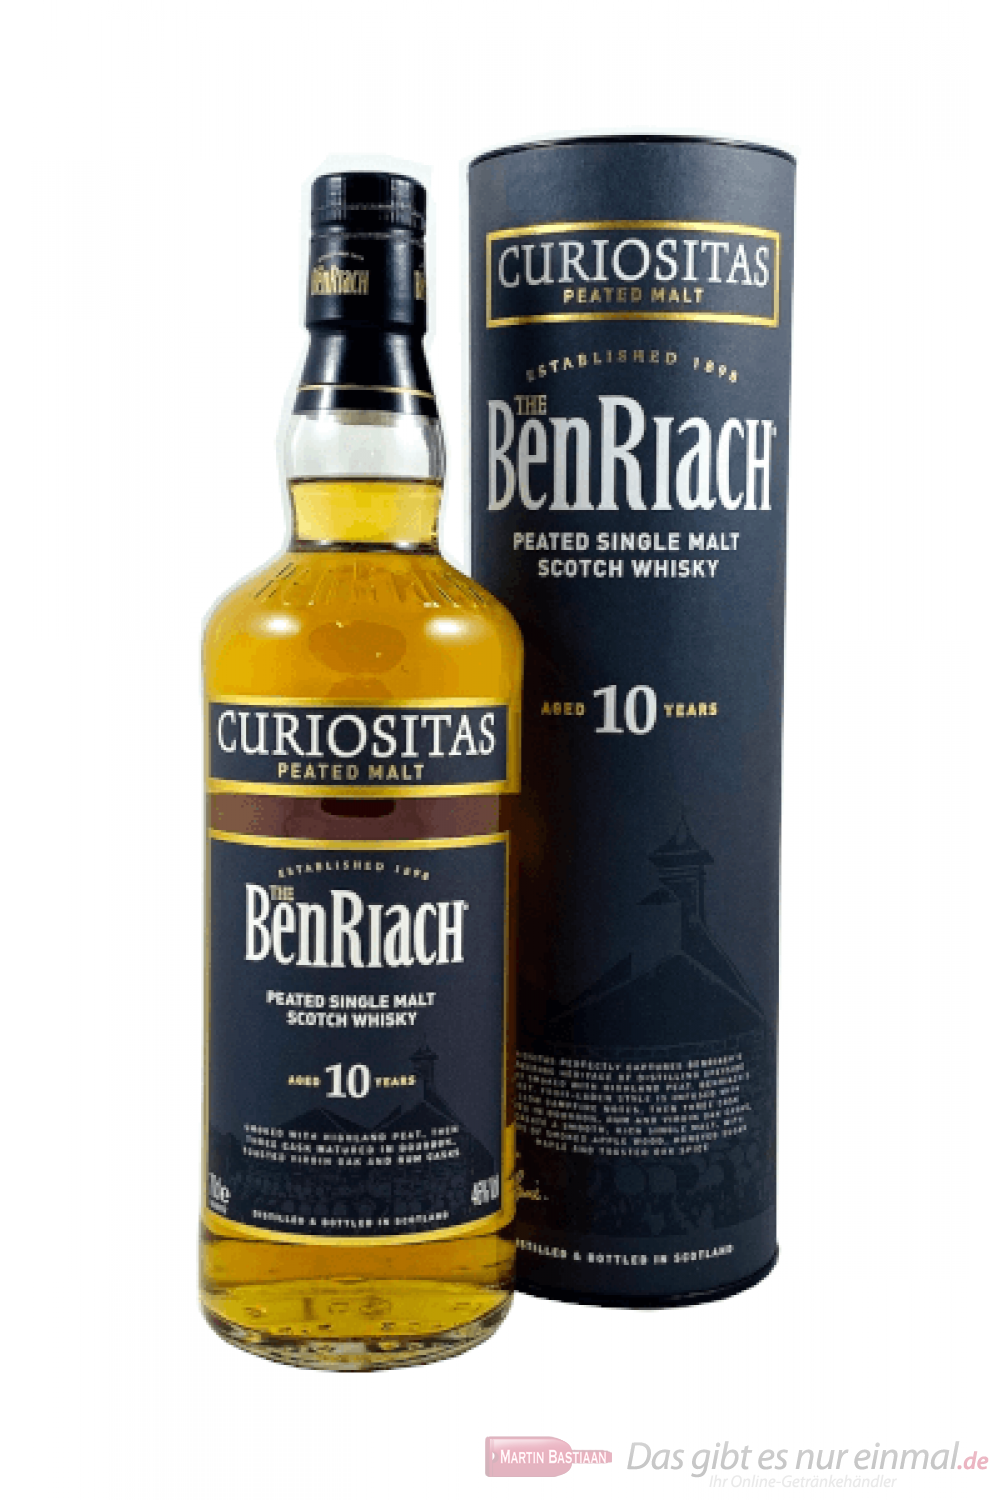 BenRiach Curiositas 10 years Single Malt Scotch Whisky 0,7l